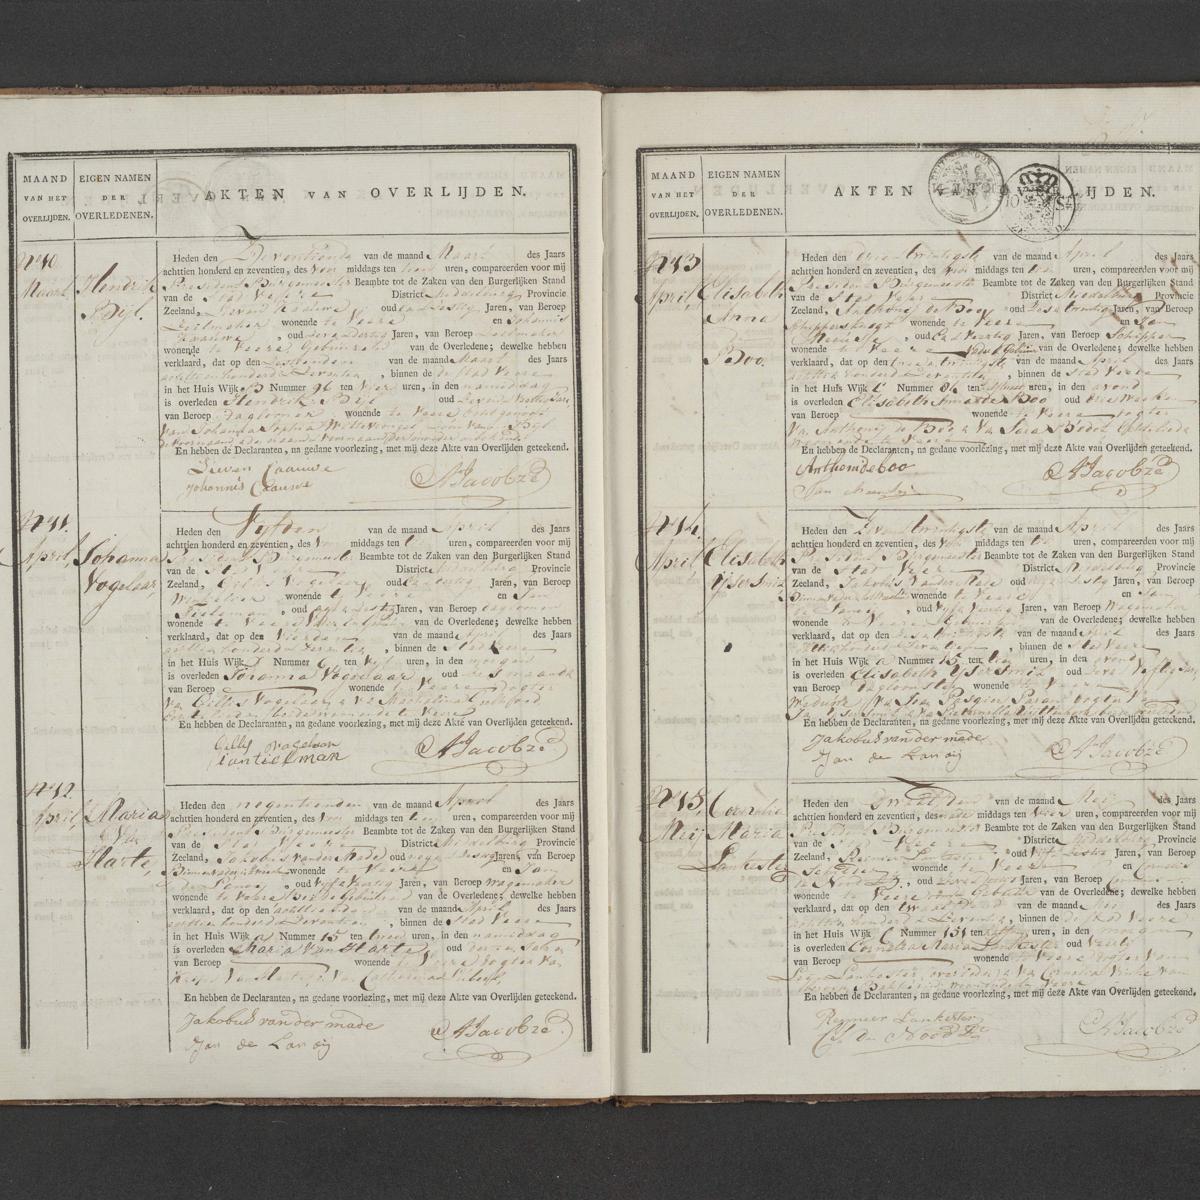 Civil registry of deaths, Veere, 1817, records 10-15